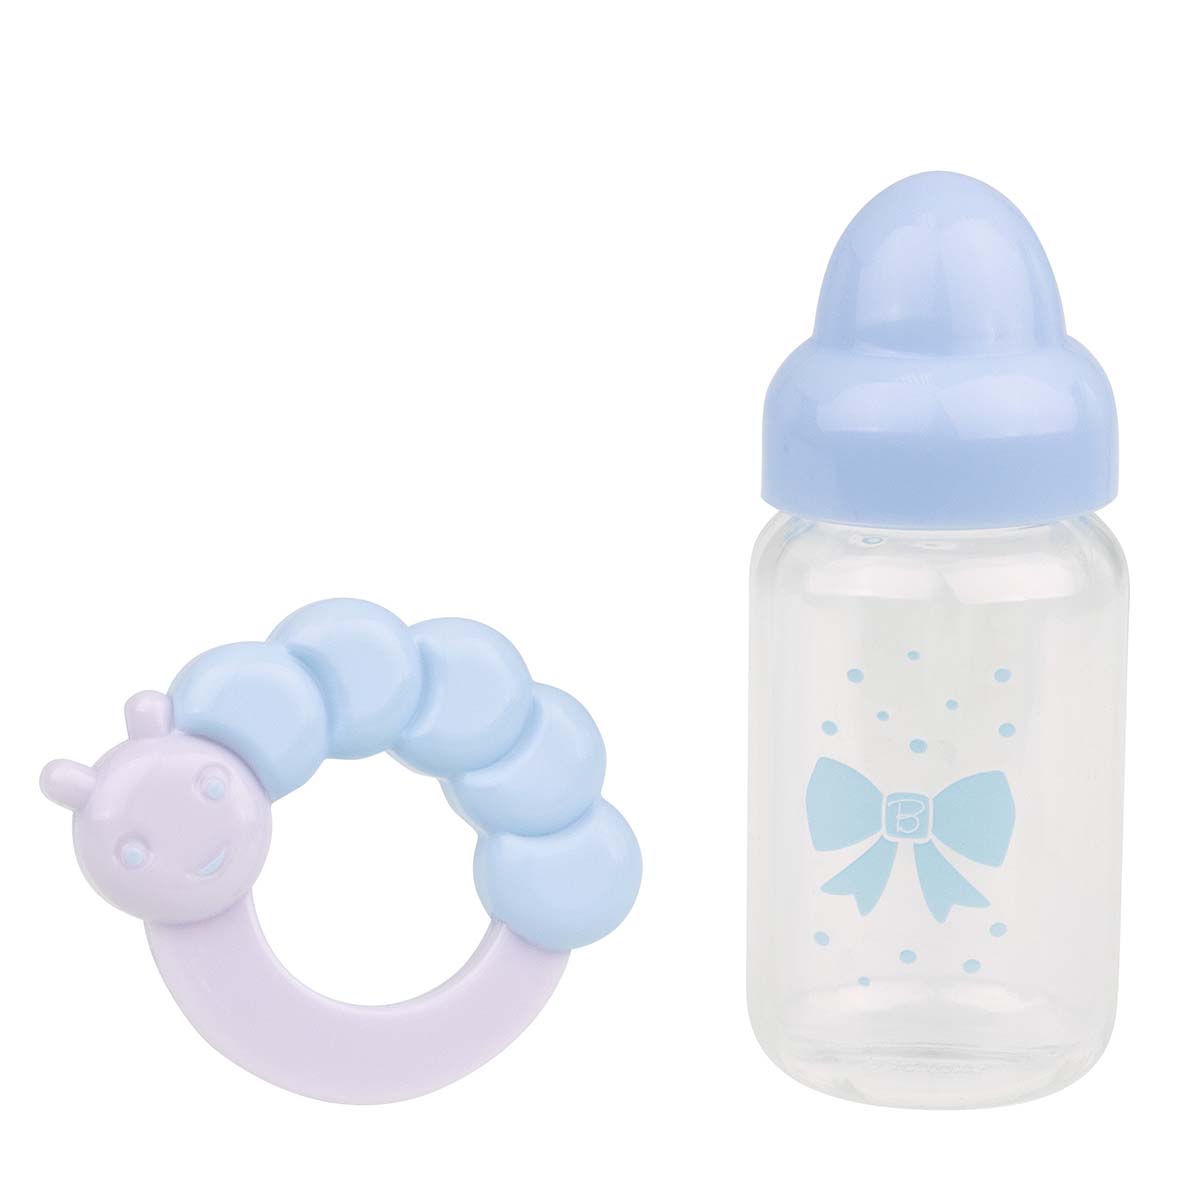 La Newborn All-Vinyl Baby Doll in blue set with accessories